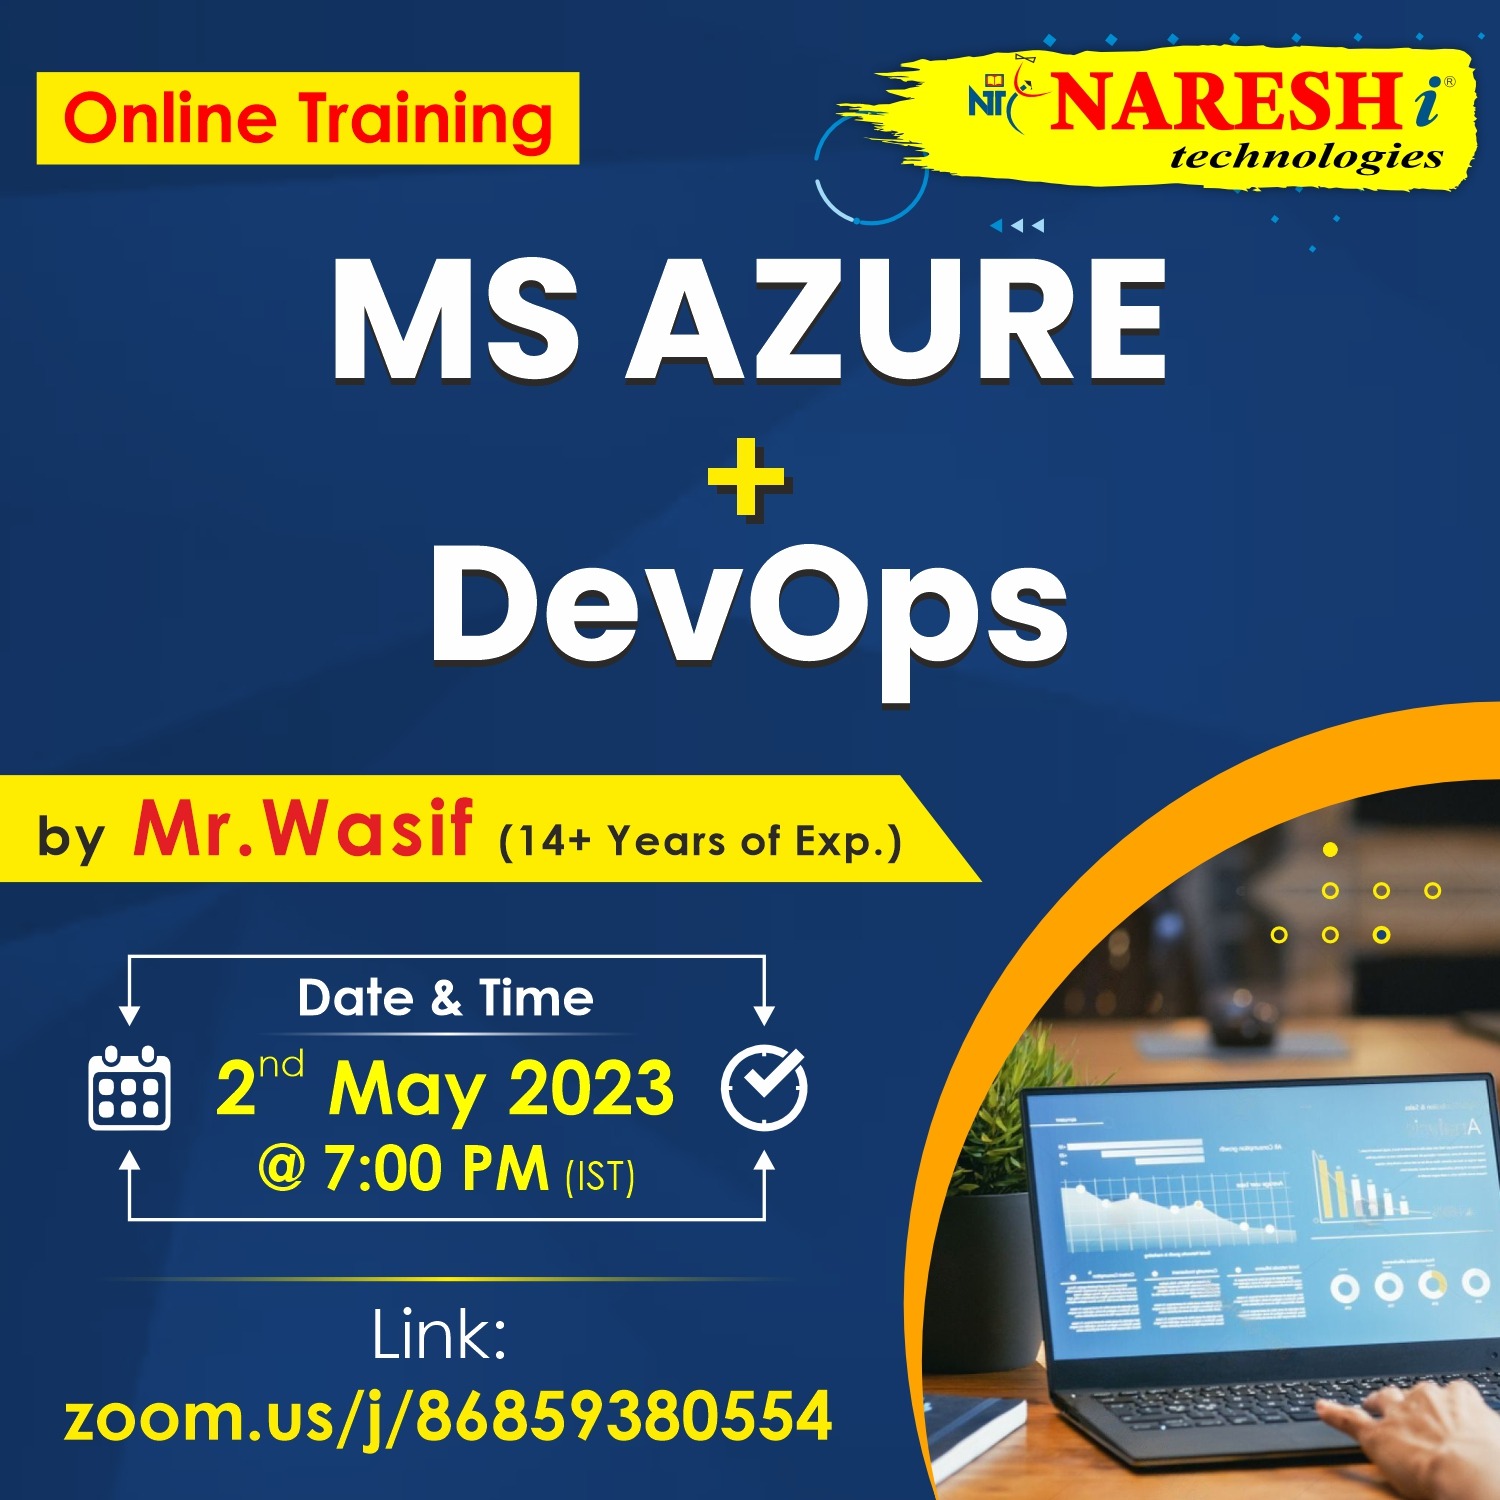 TOP Microsoft Azure Devops Course Training In 2023, Online Event